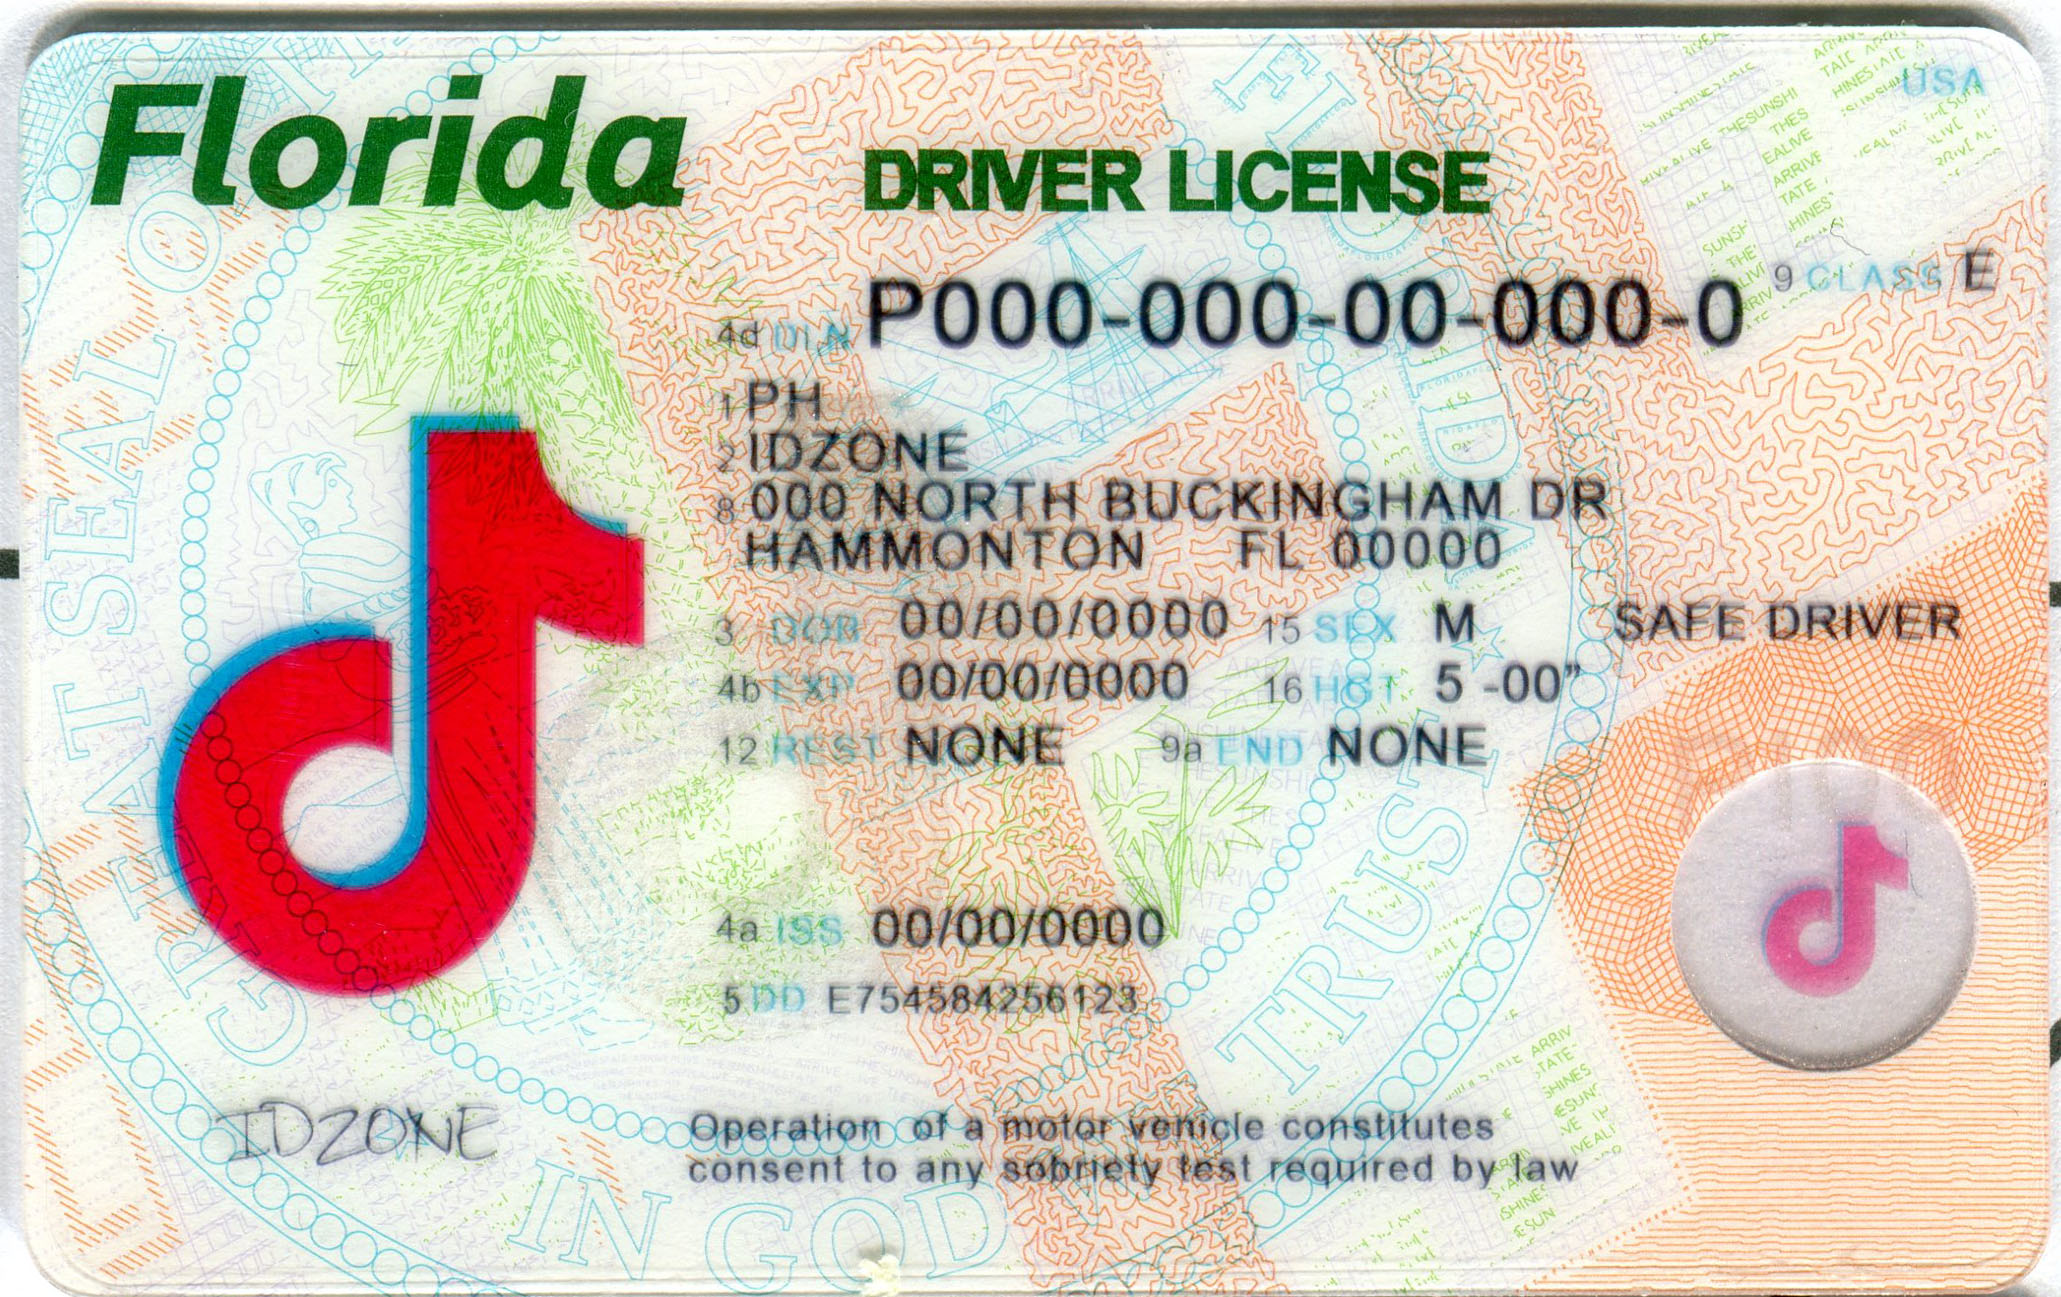 FLORIDA-New Scannable fake id